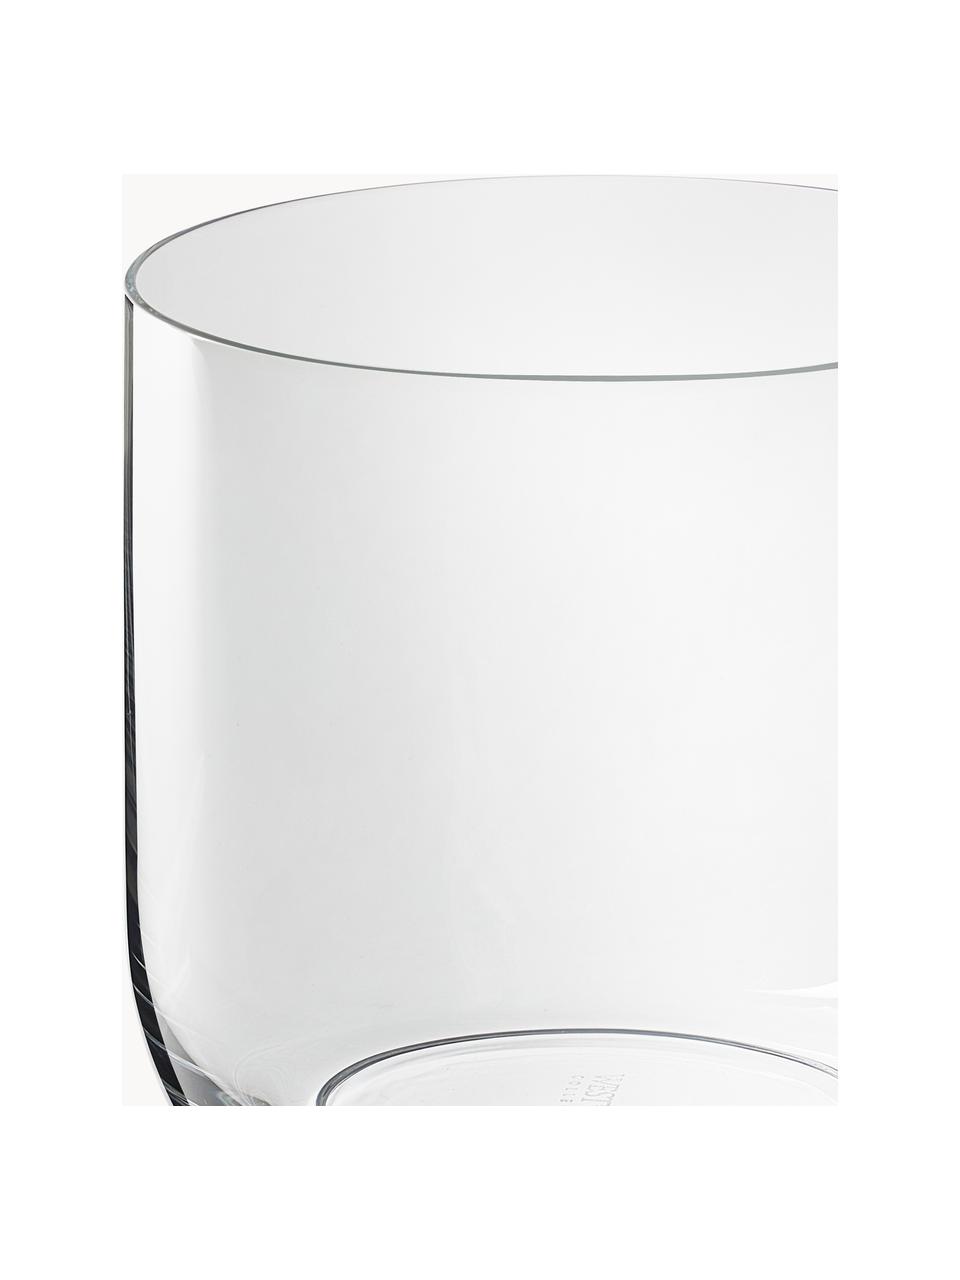 Szklanka Eleia, 4 szt., Szkło kryształowe, Transparentny, Ø 7 x W 9 cm, 288 ml